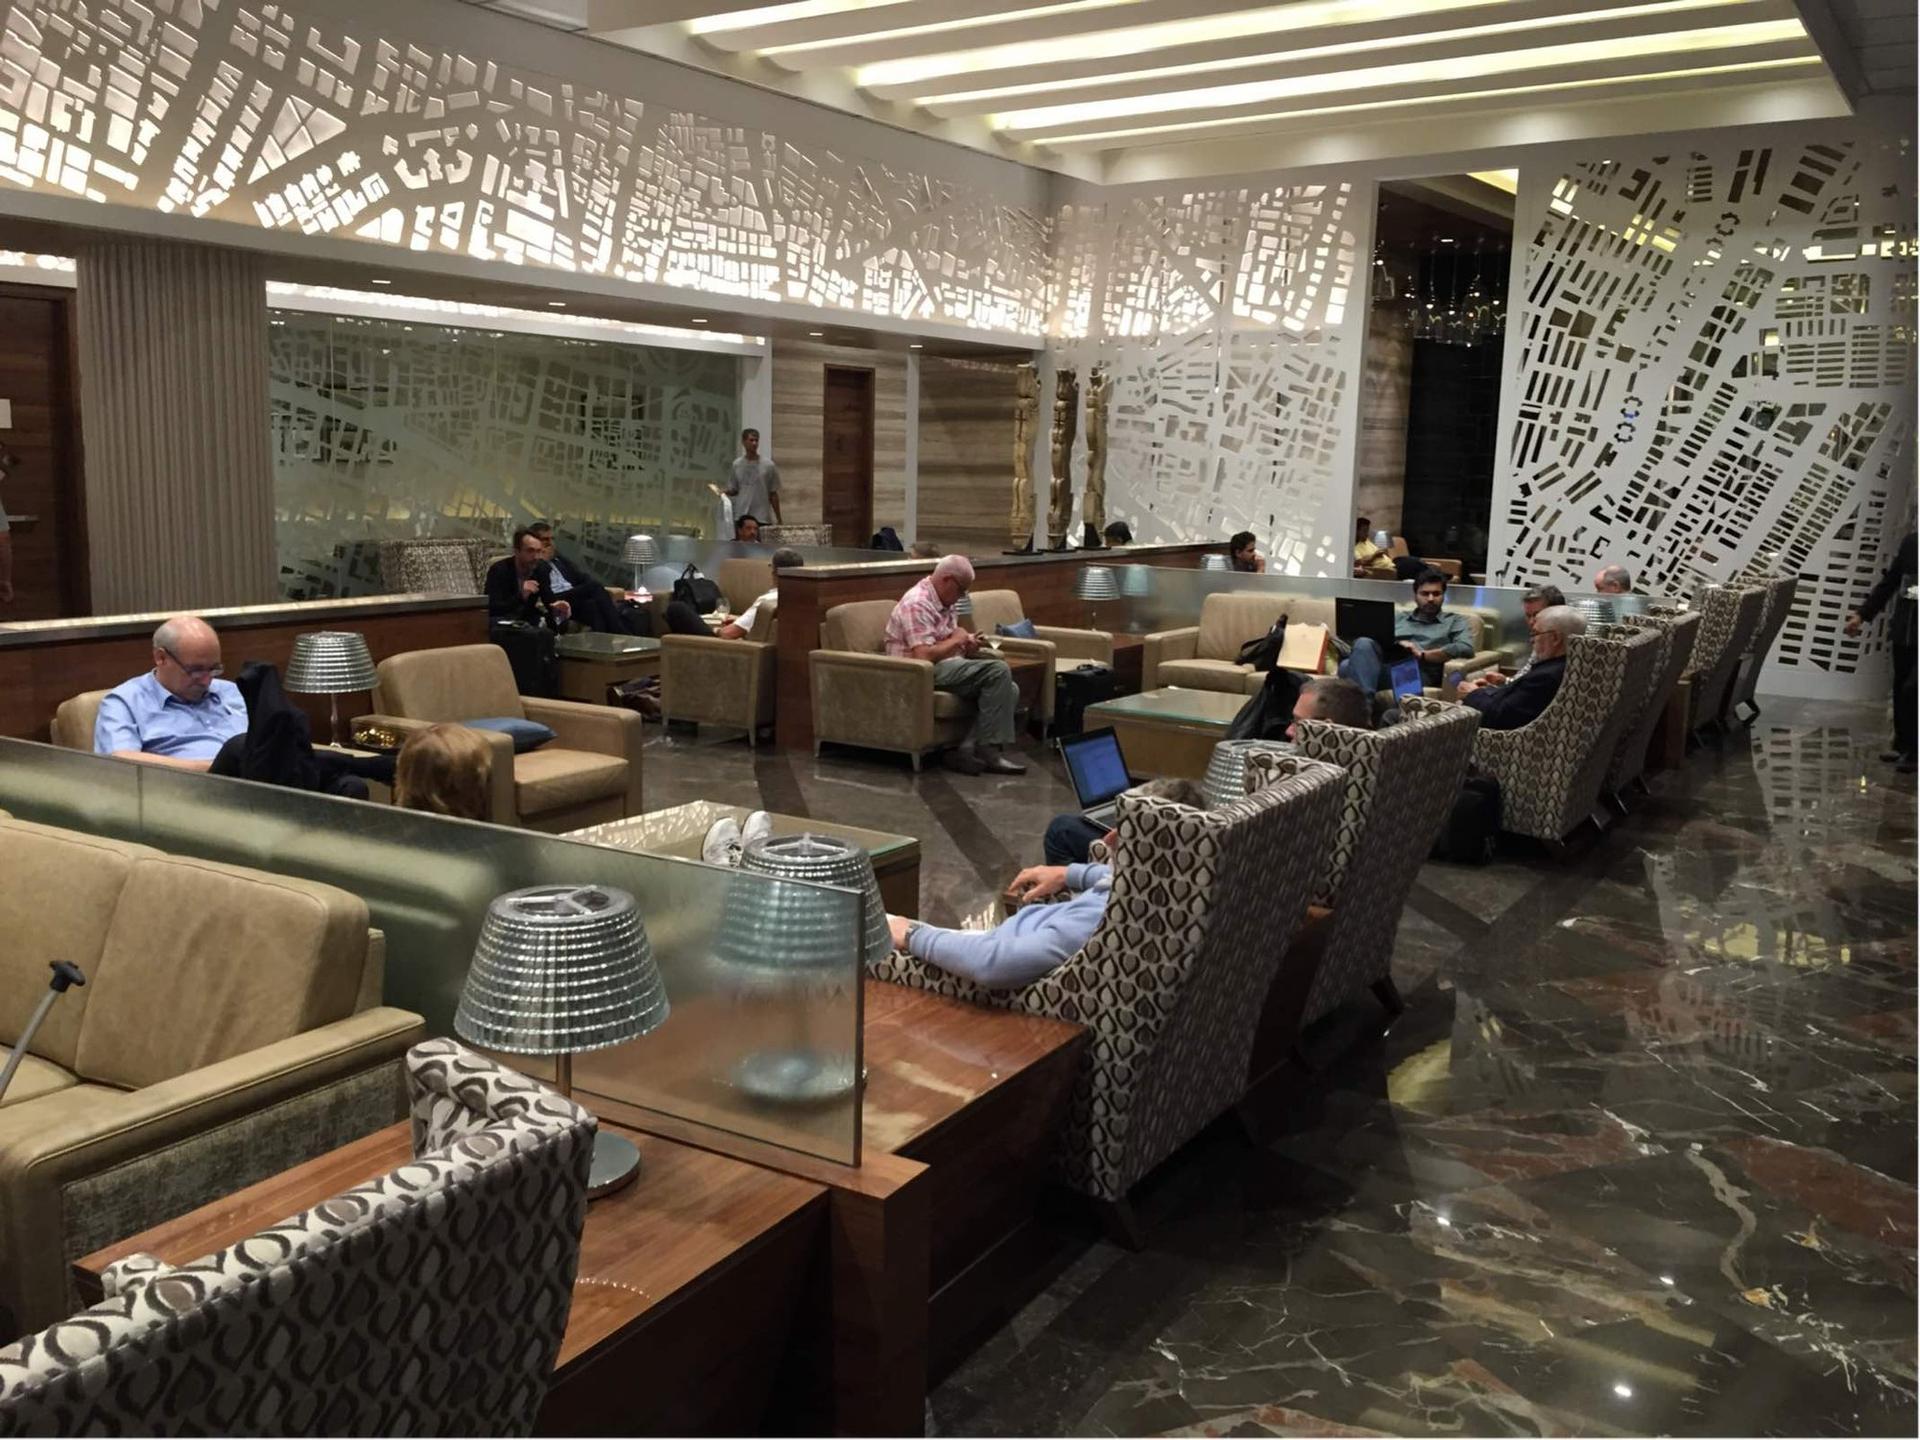 Adani Lounge (International West Wing) image 8 of 60